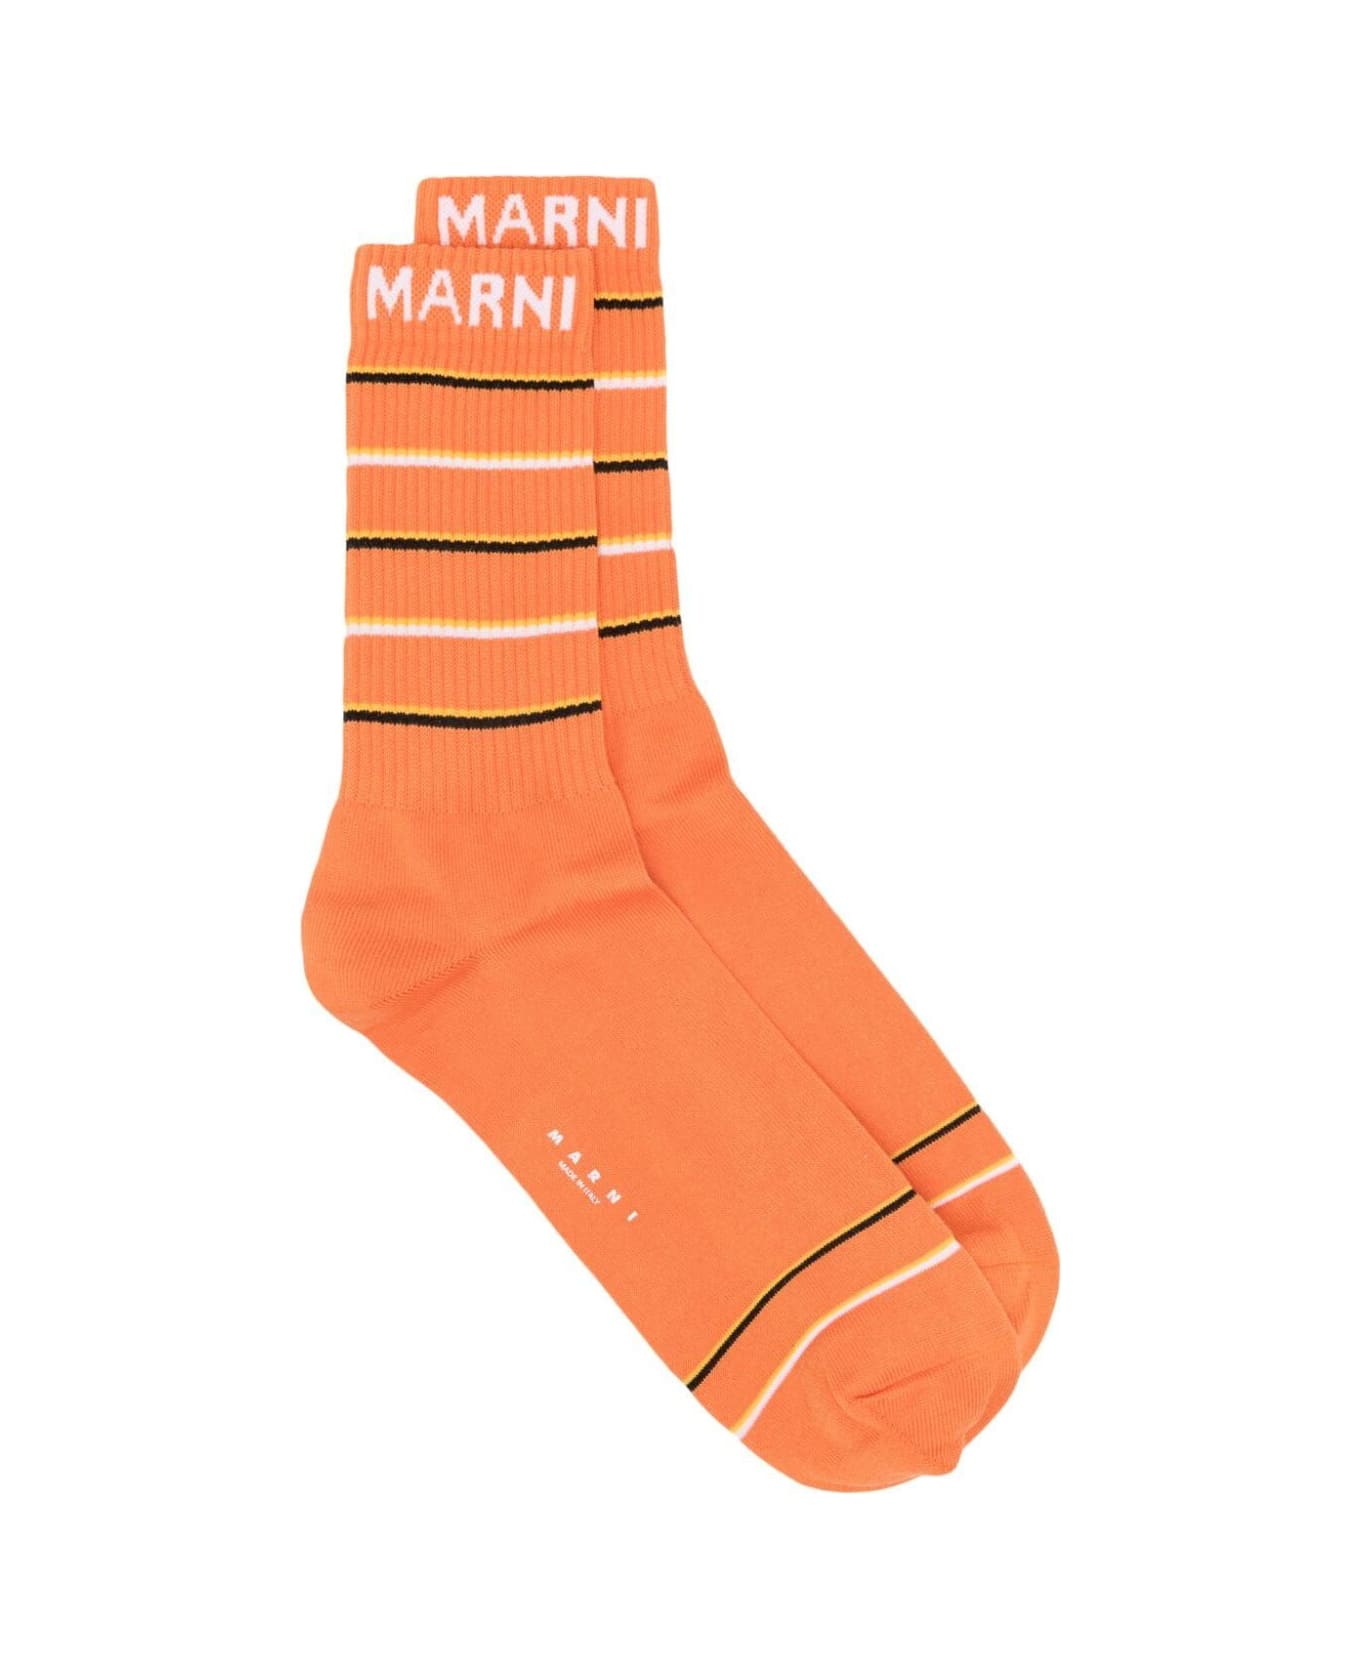 Marni Socks - Nectarine